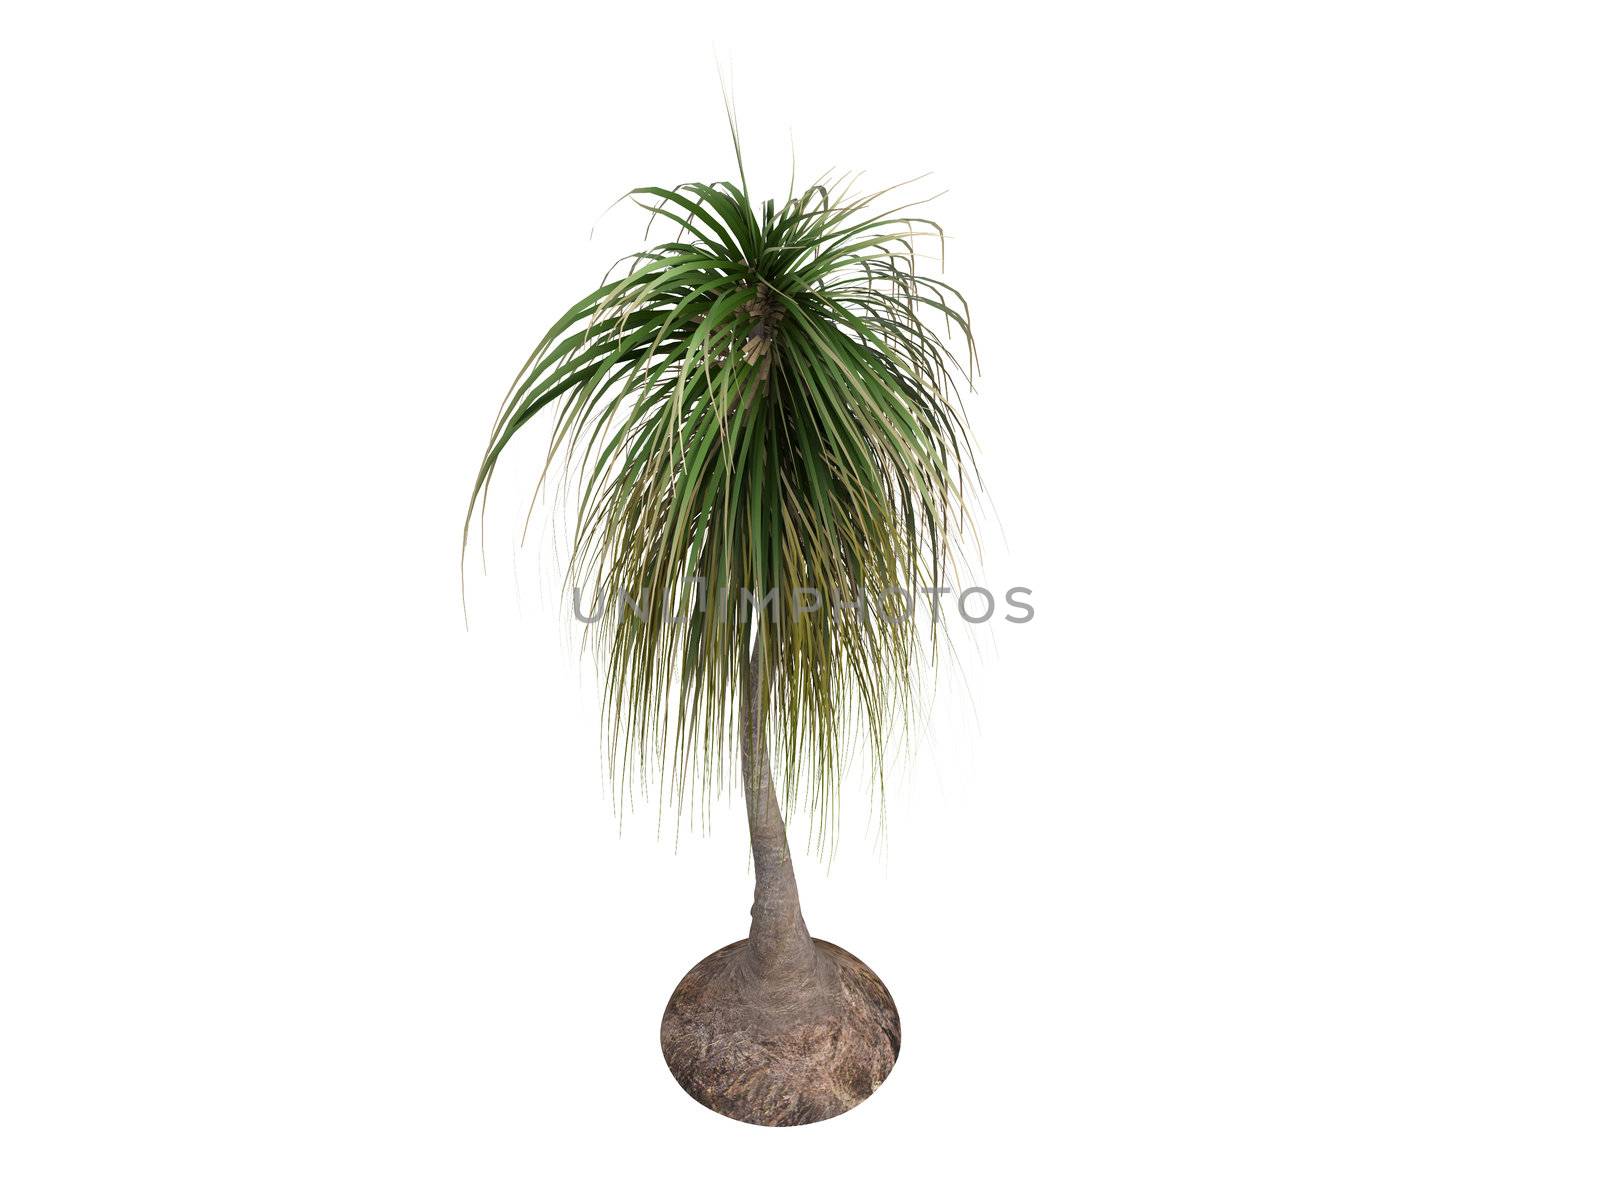 Ponytail Palm or Nolina recurvata by AlexanderMorozov